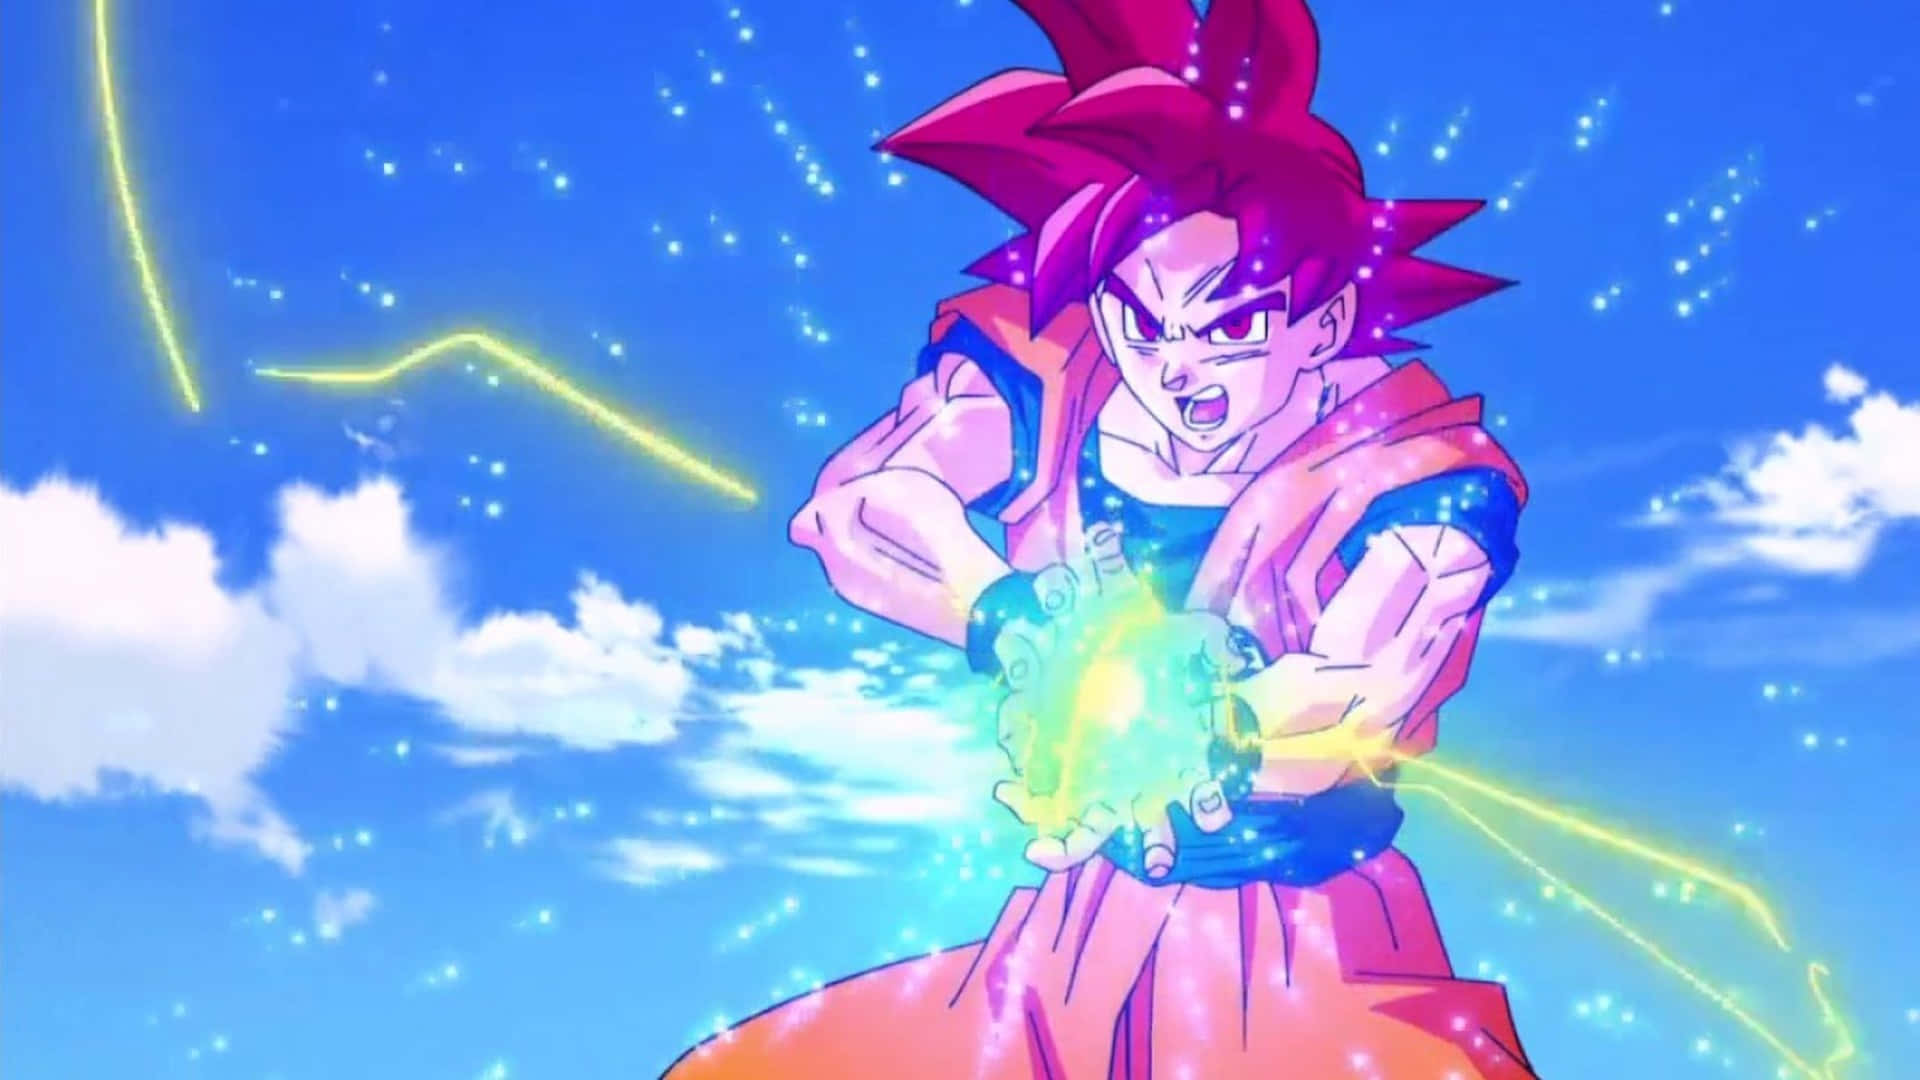 Dragonball Z Super Saiyan Goku Präsentiert Stolz Seine Kräfte Über Dem Himmel. Wallpaper